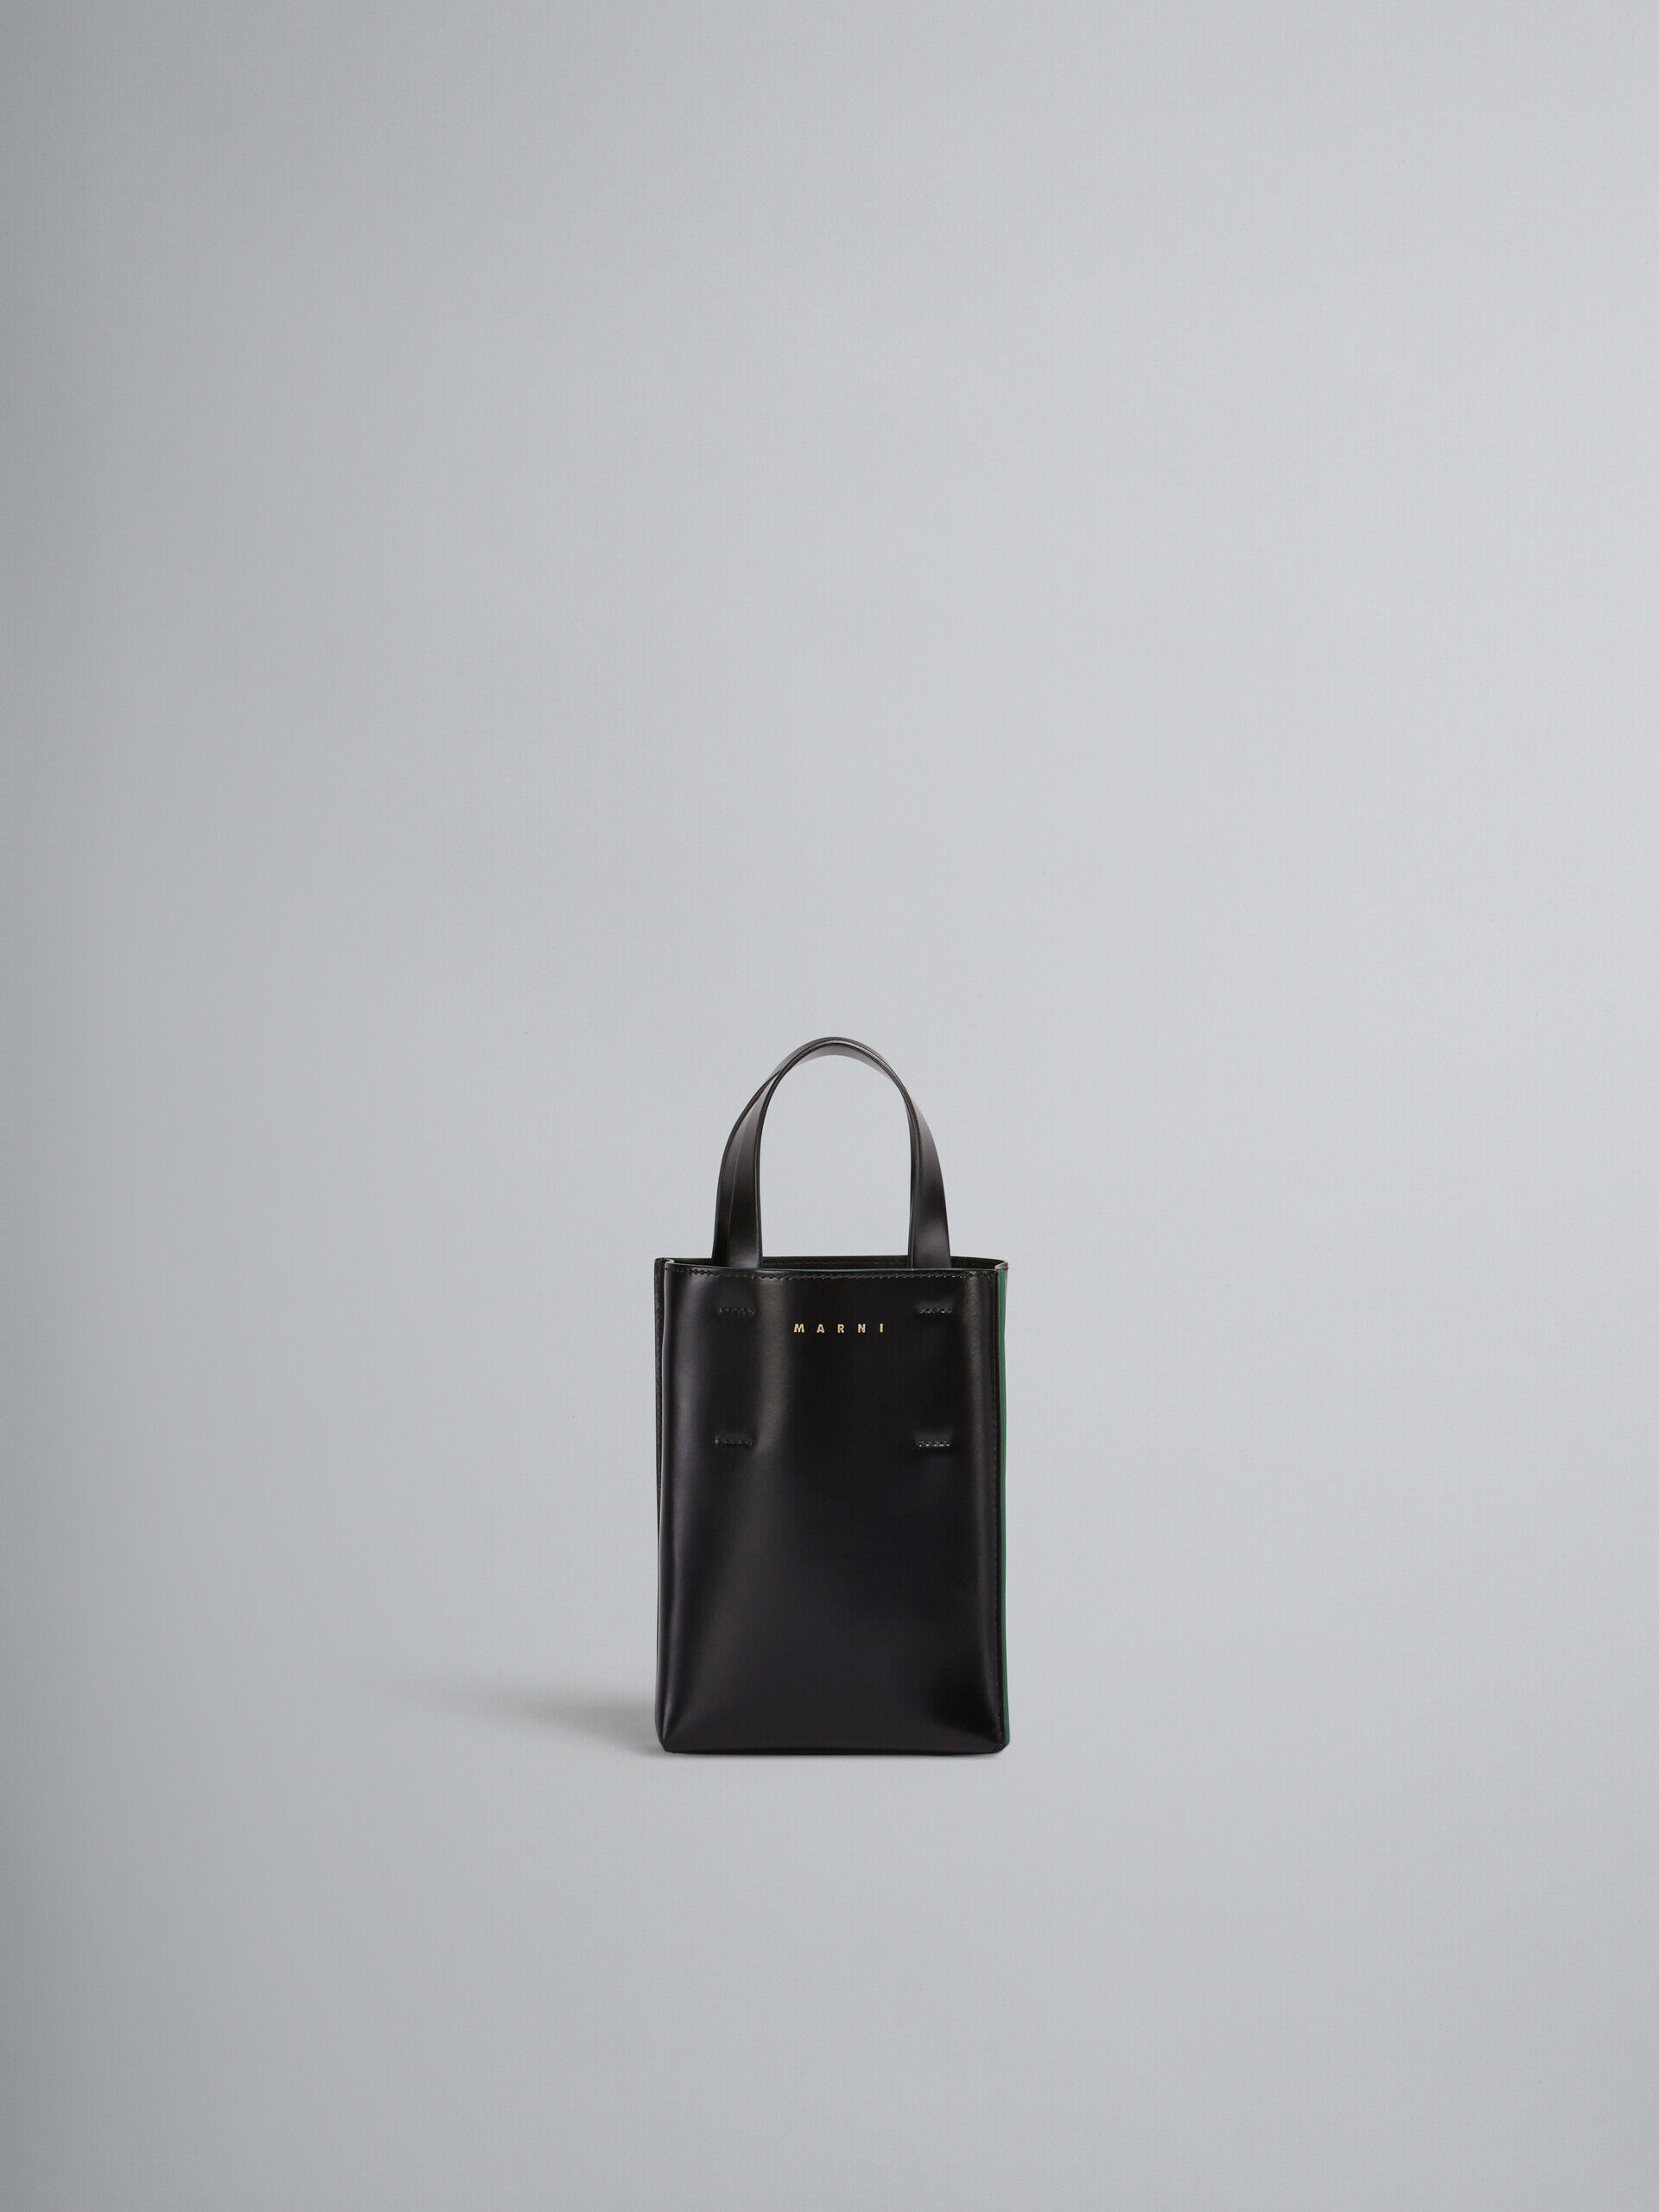 MUSEO nano bag in black shiny leather | Marni